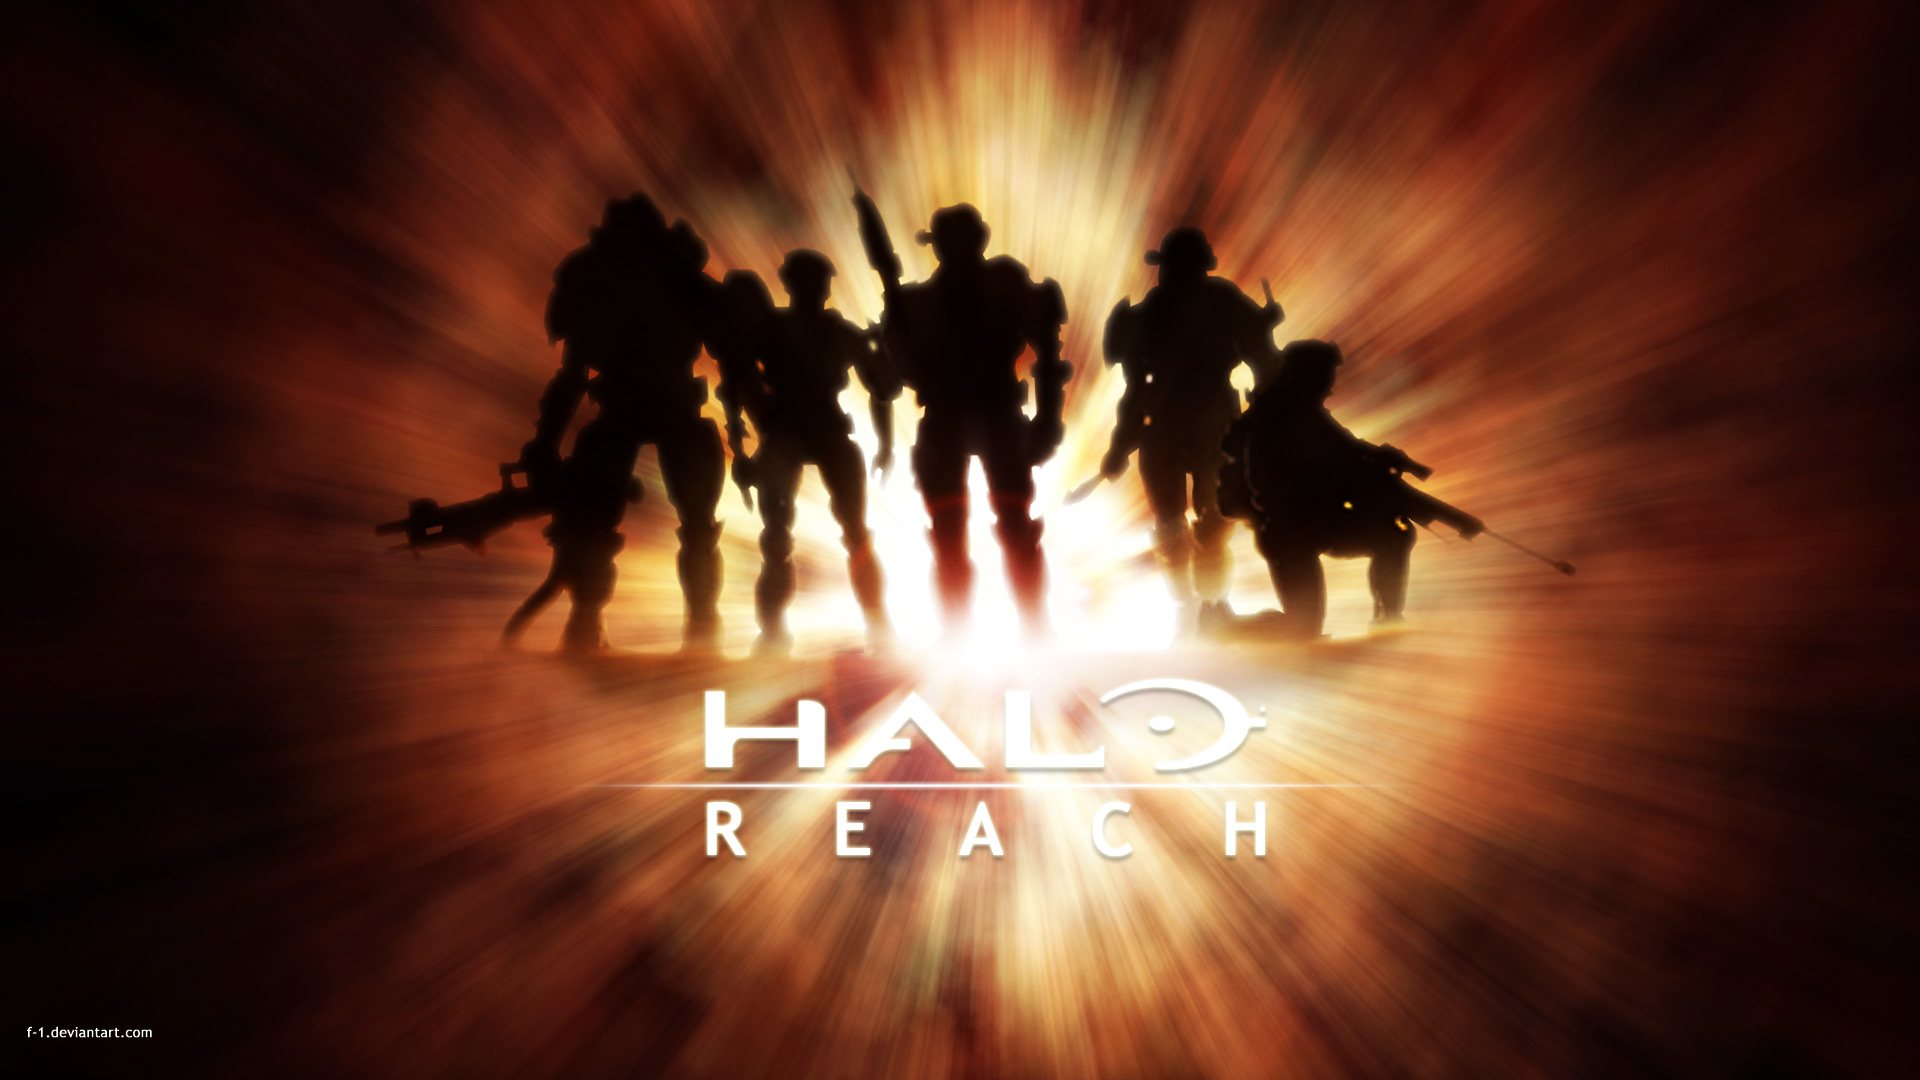 Halo Reach Desktops Image Features